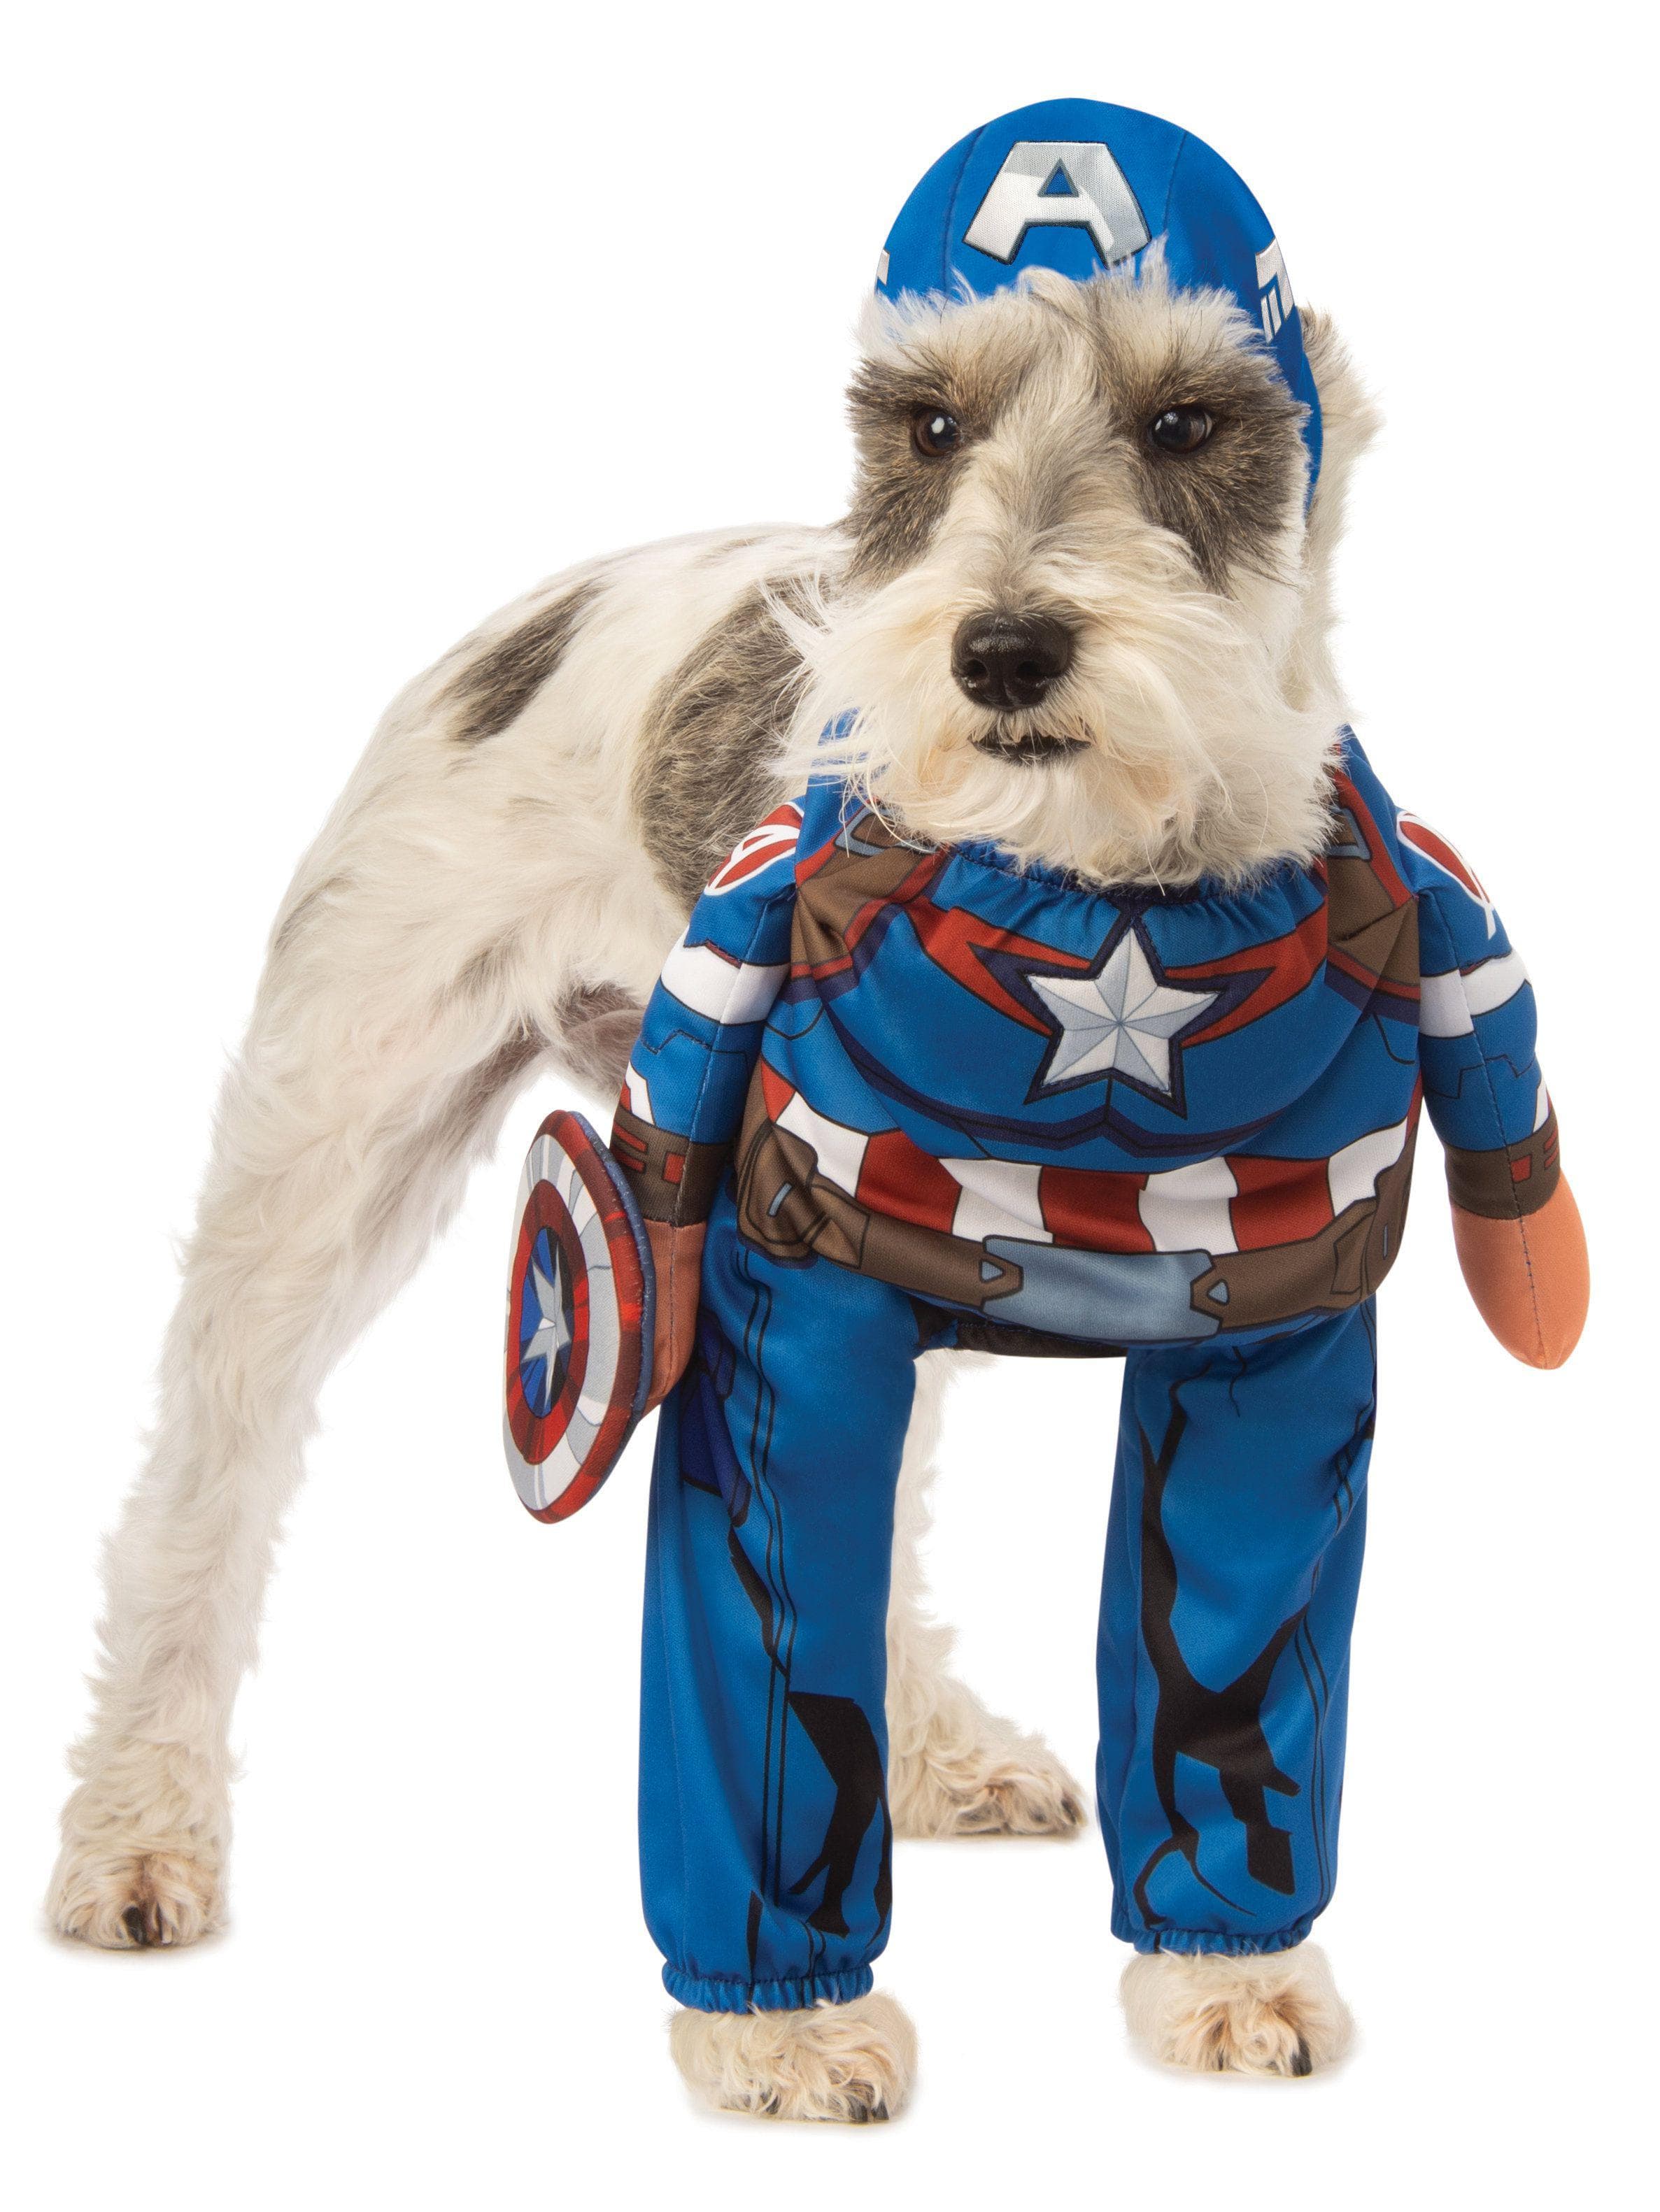 Avengers Captain America Walking Pet Costume - costumes.com